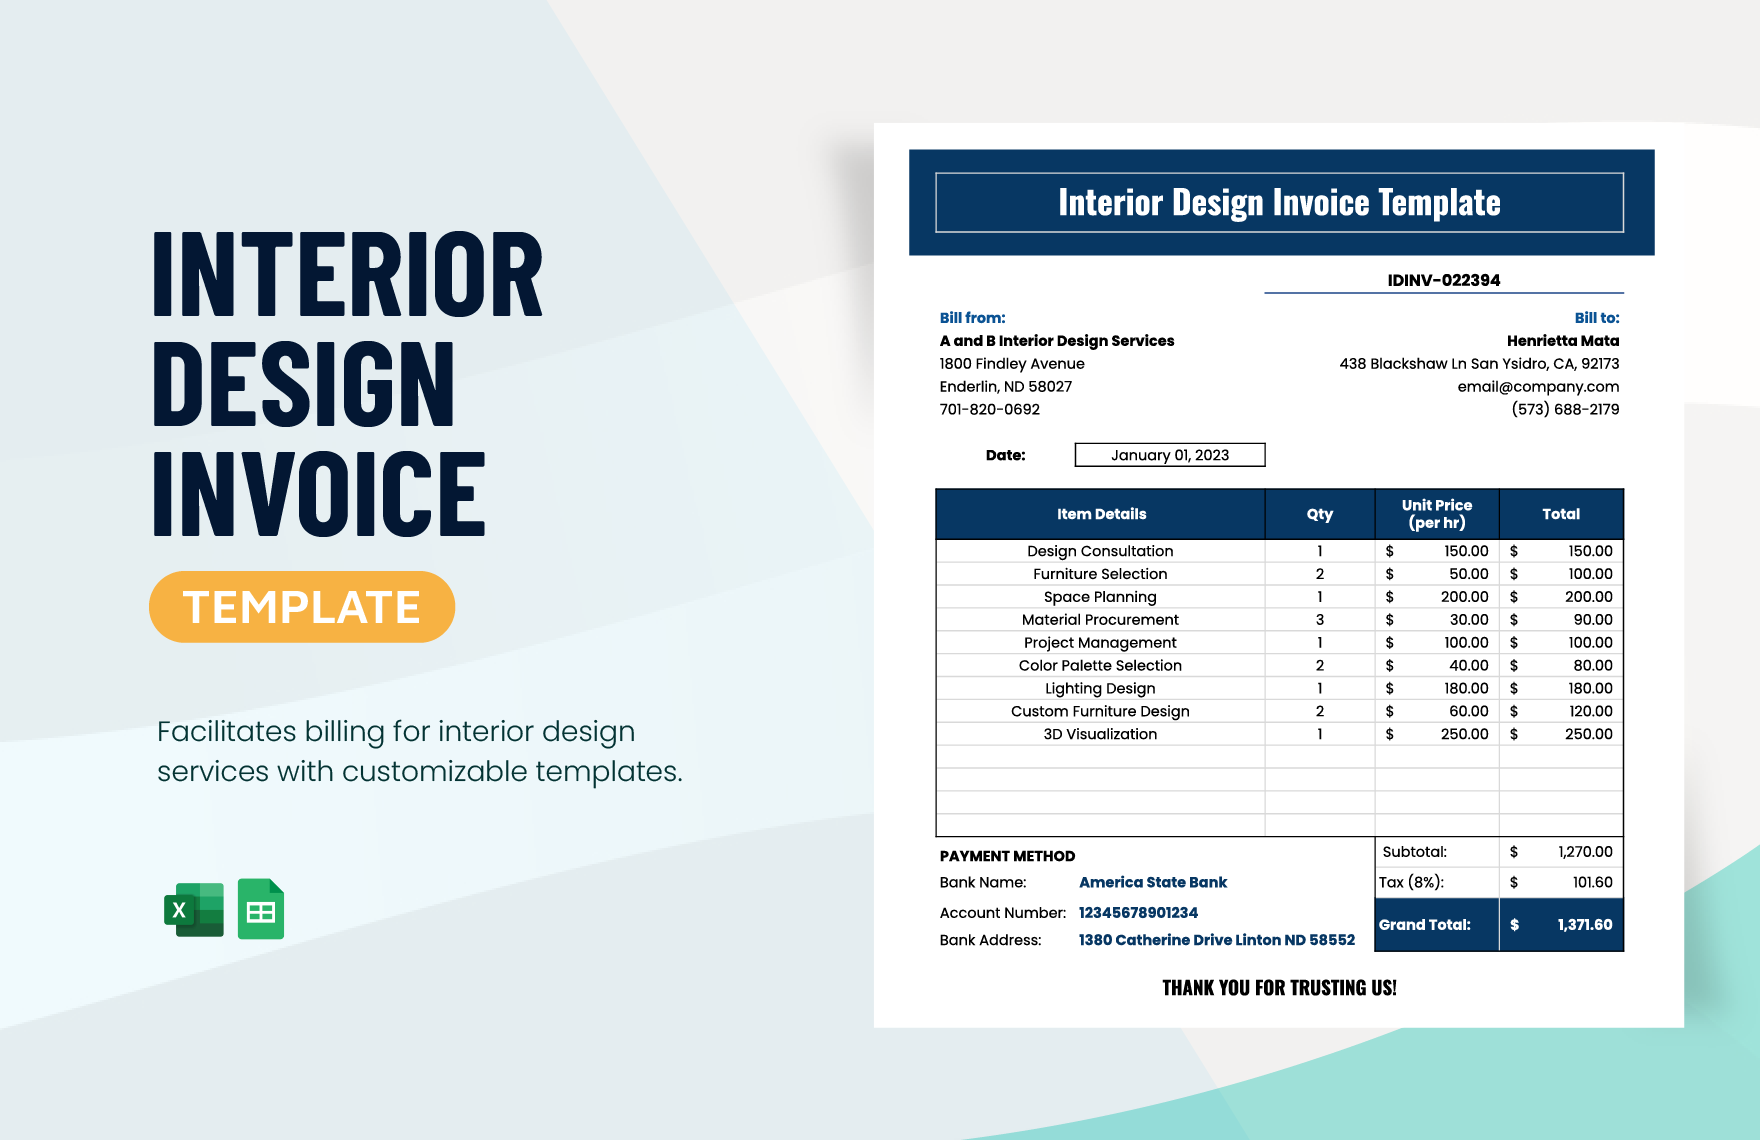 Interior Design Invoice Template in Excel, Google Sheets